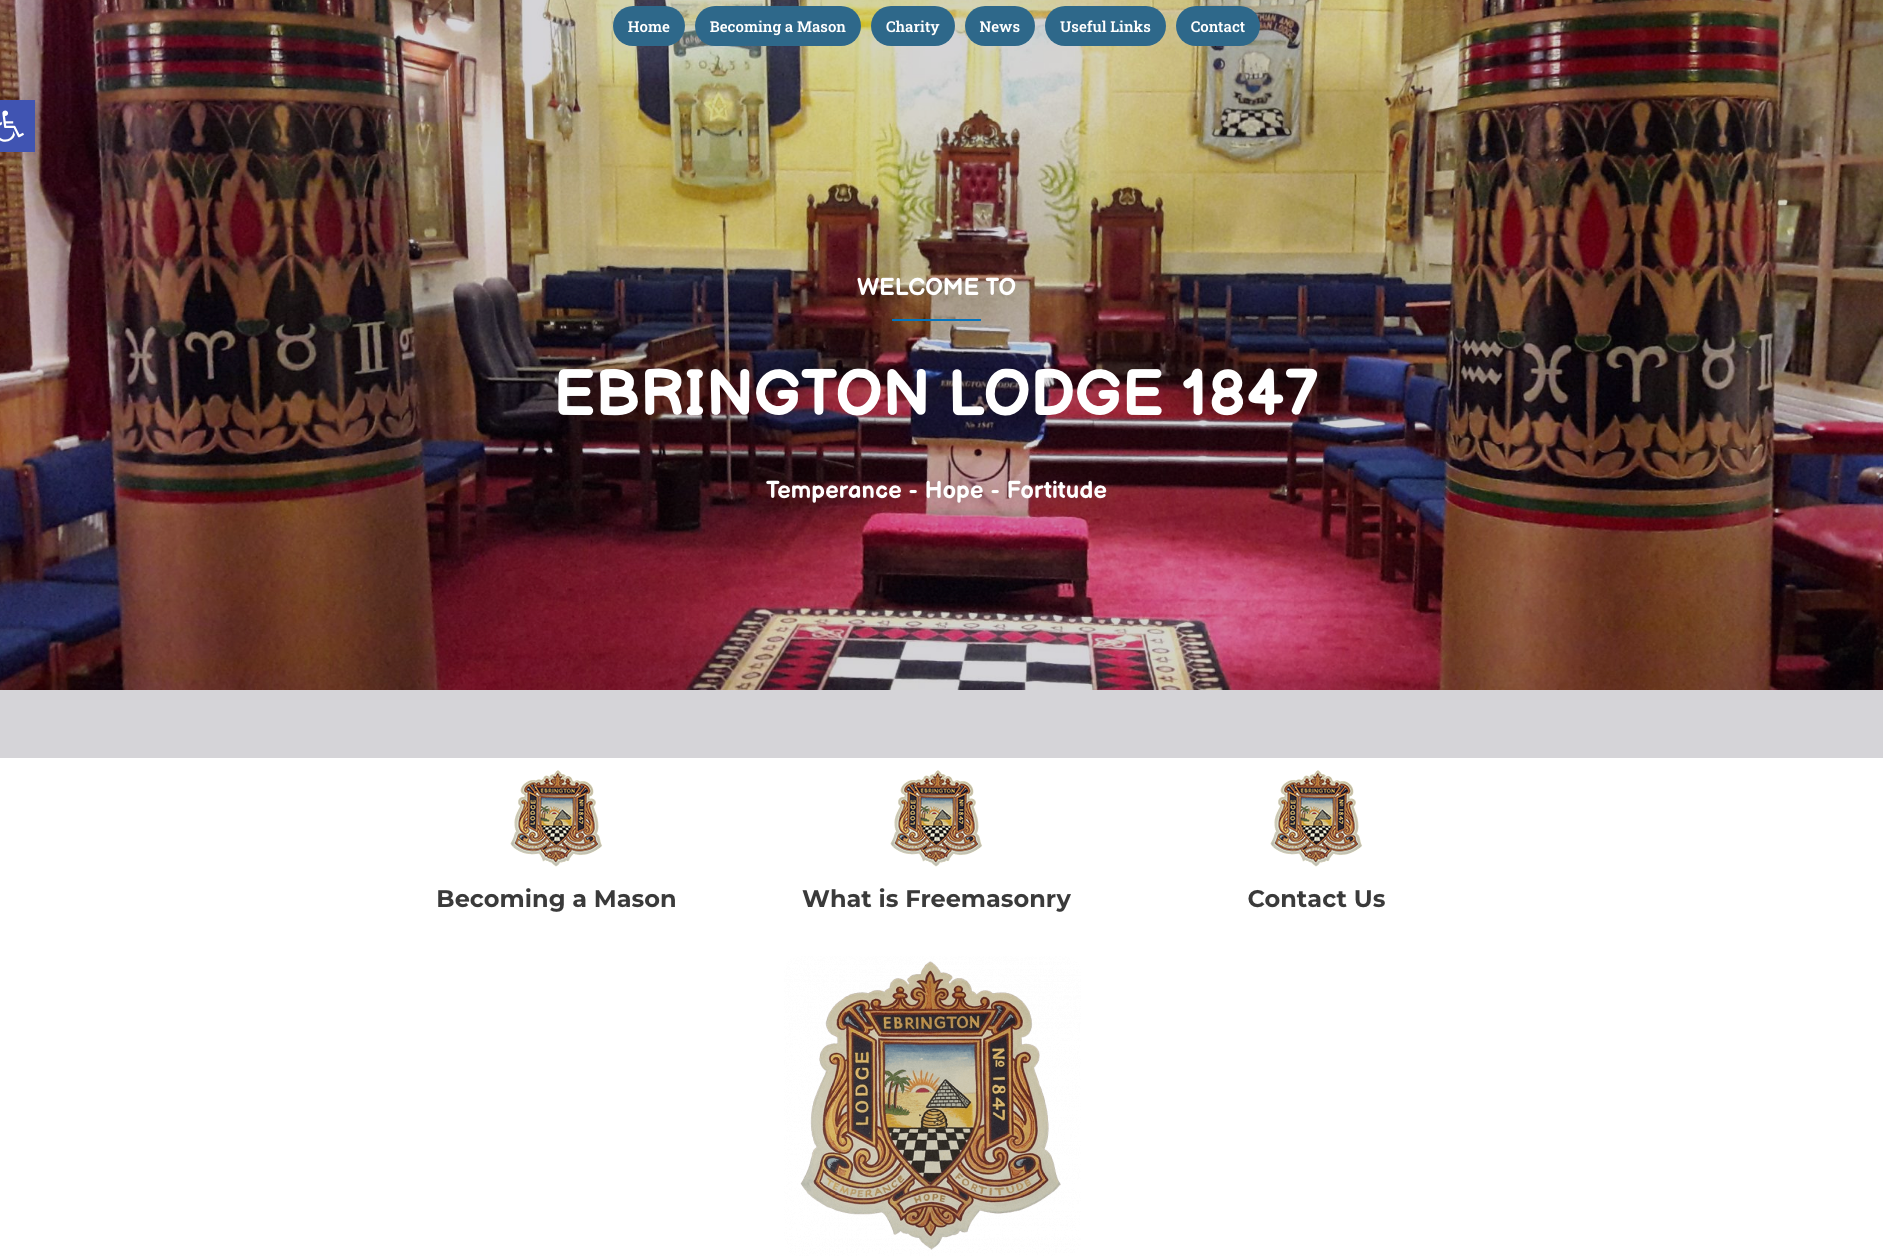 Ebrington Lodge 1847